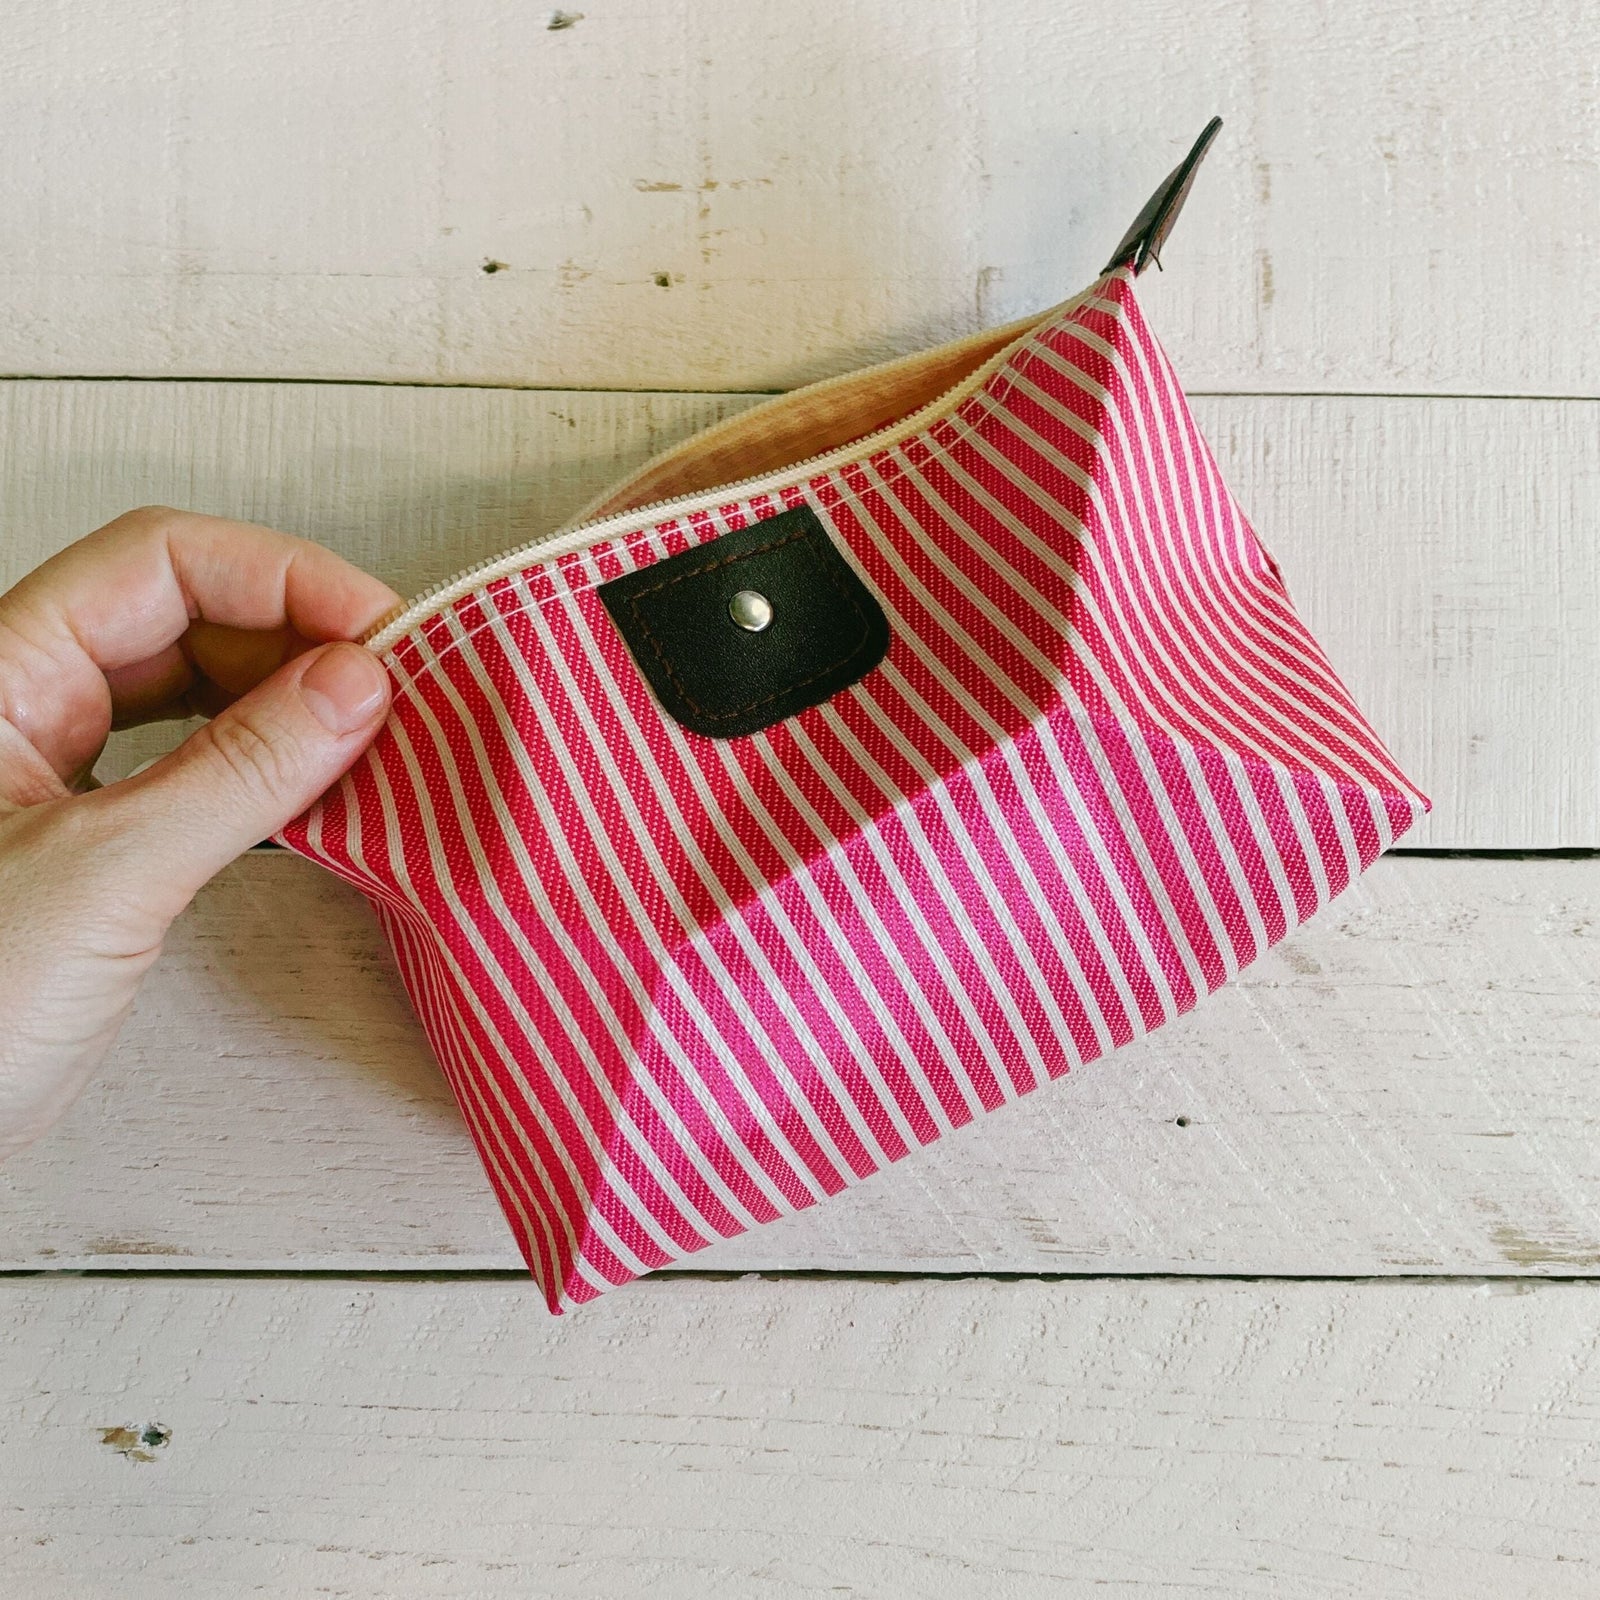 Pink Portable Lightweight Cosmetics Bag | Travel Toiletry Organizer